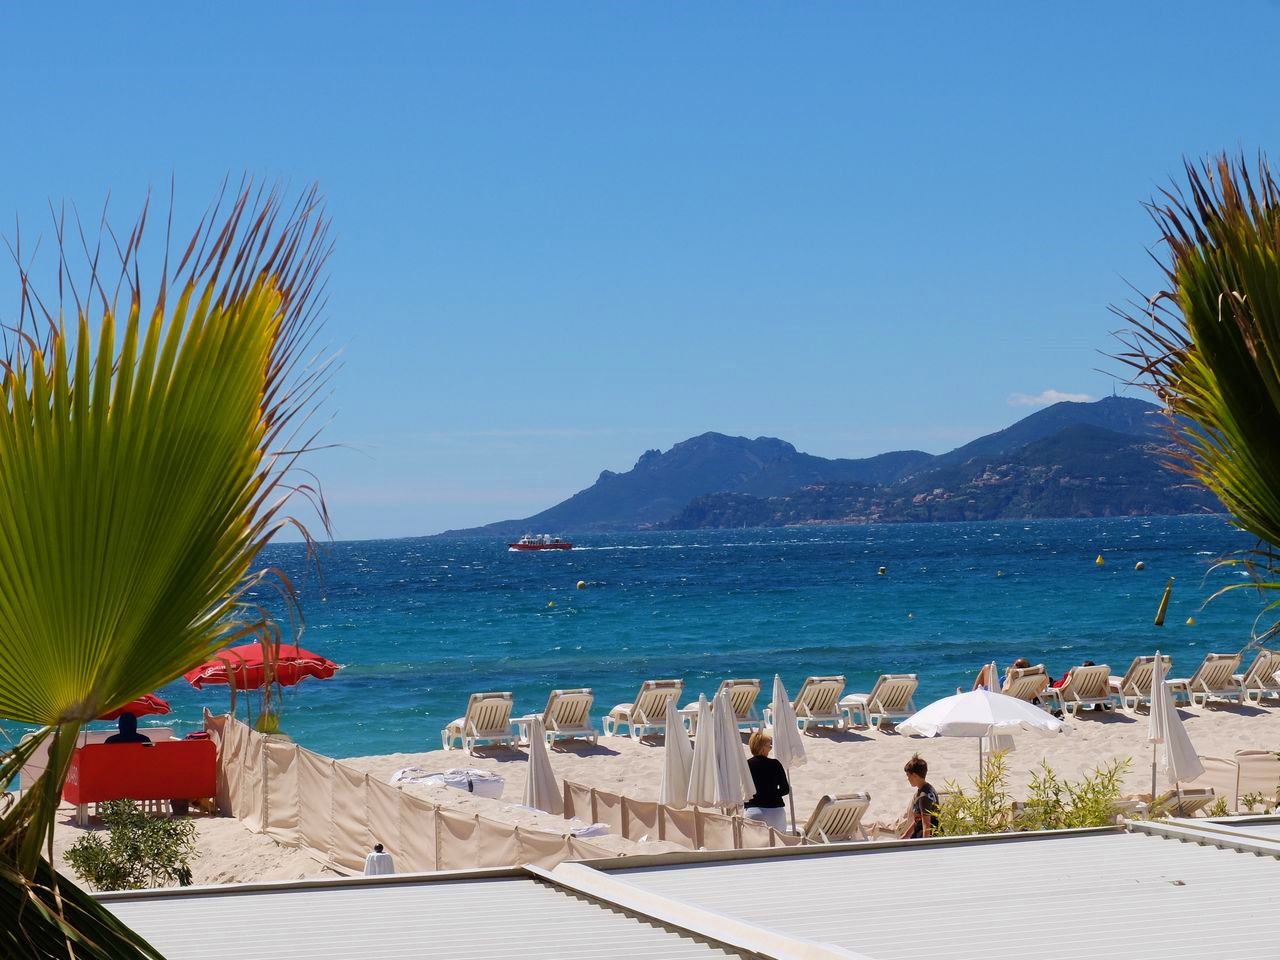 Die Croisette - 
Die wohl berühmteste Strandpromenade der Côte d’Azur